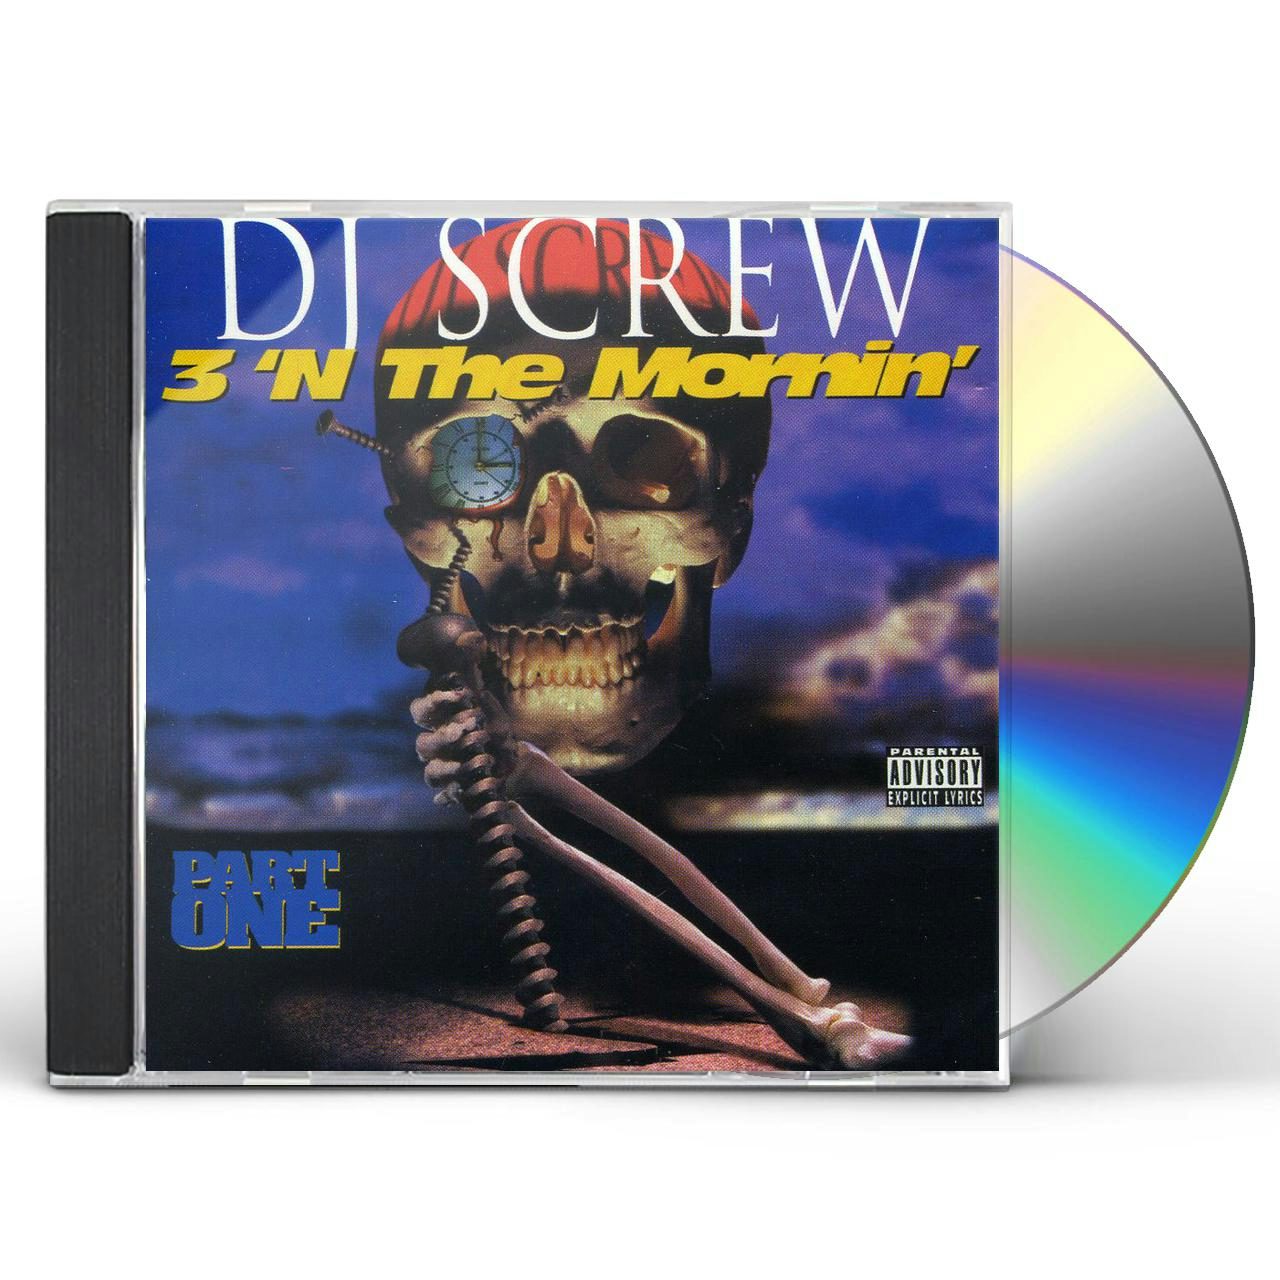 DJ Screw 3 'N THE MORNING: PART ONE CD $19.49$17.49